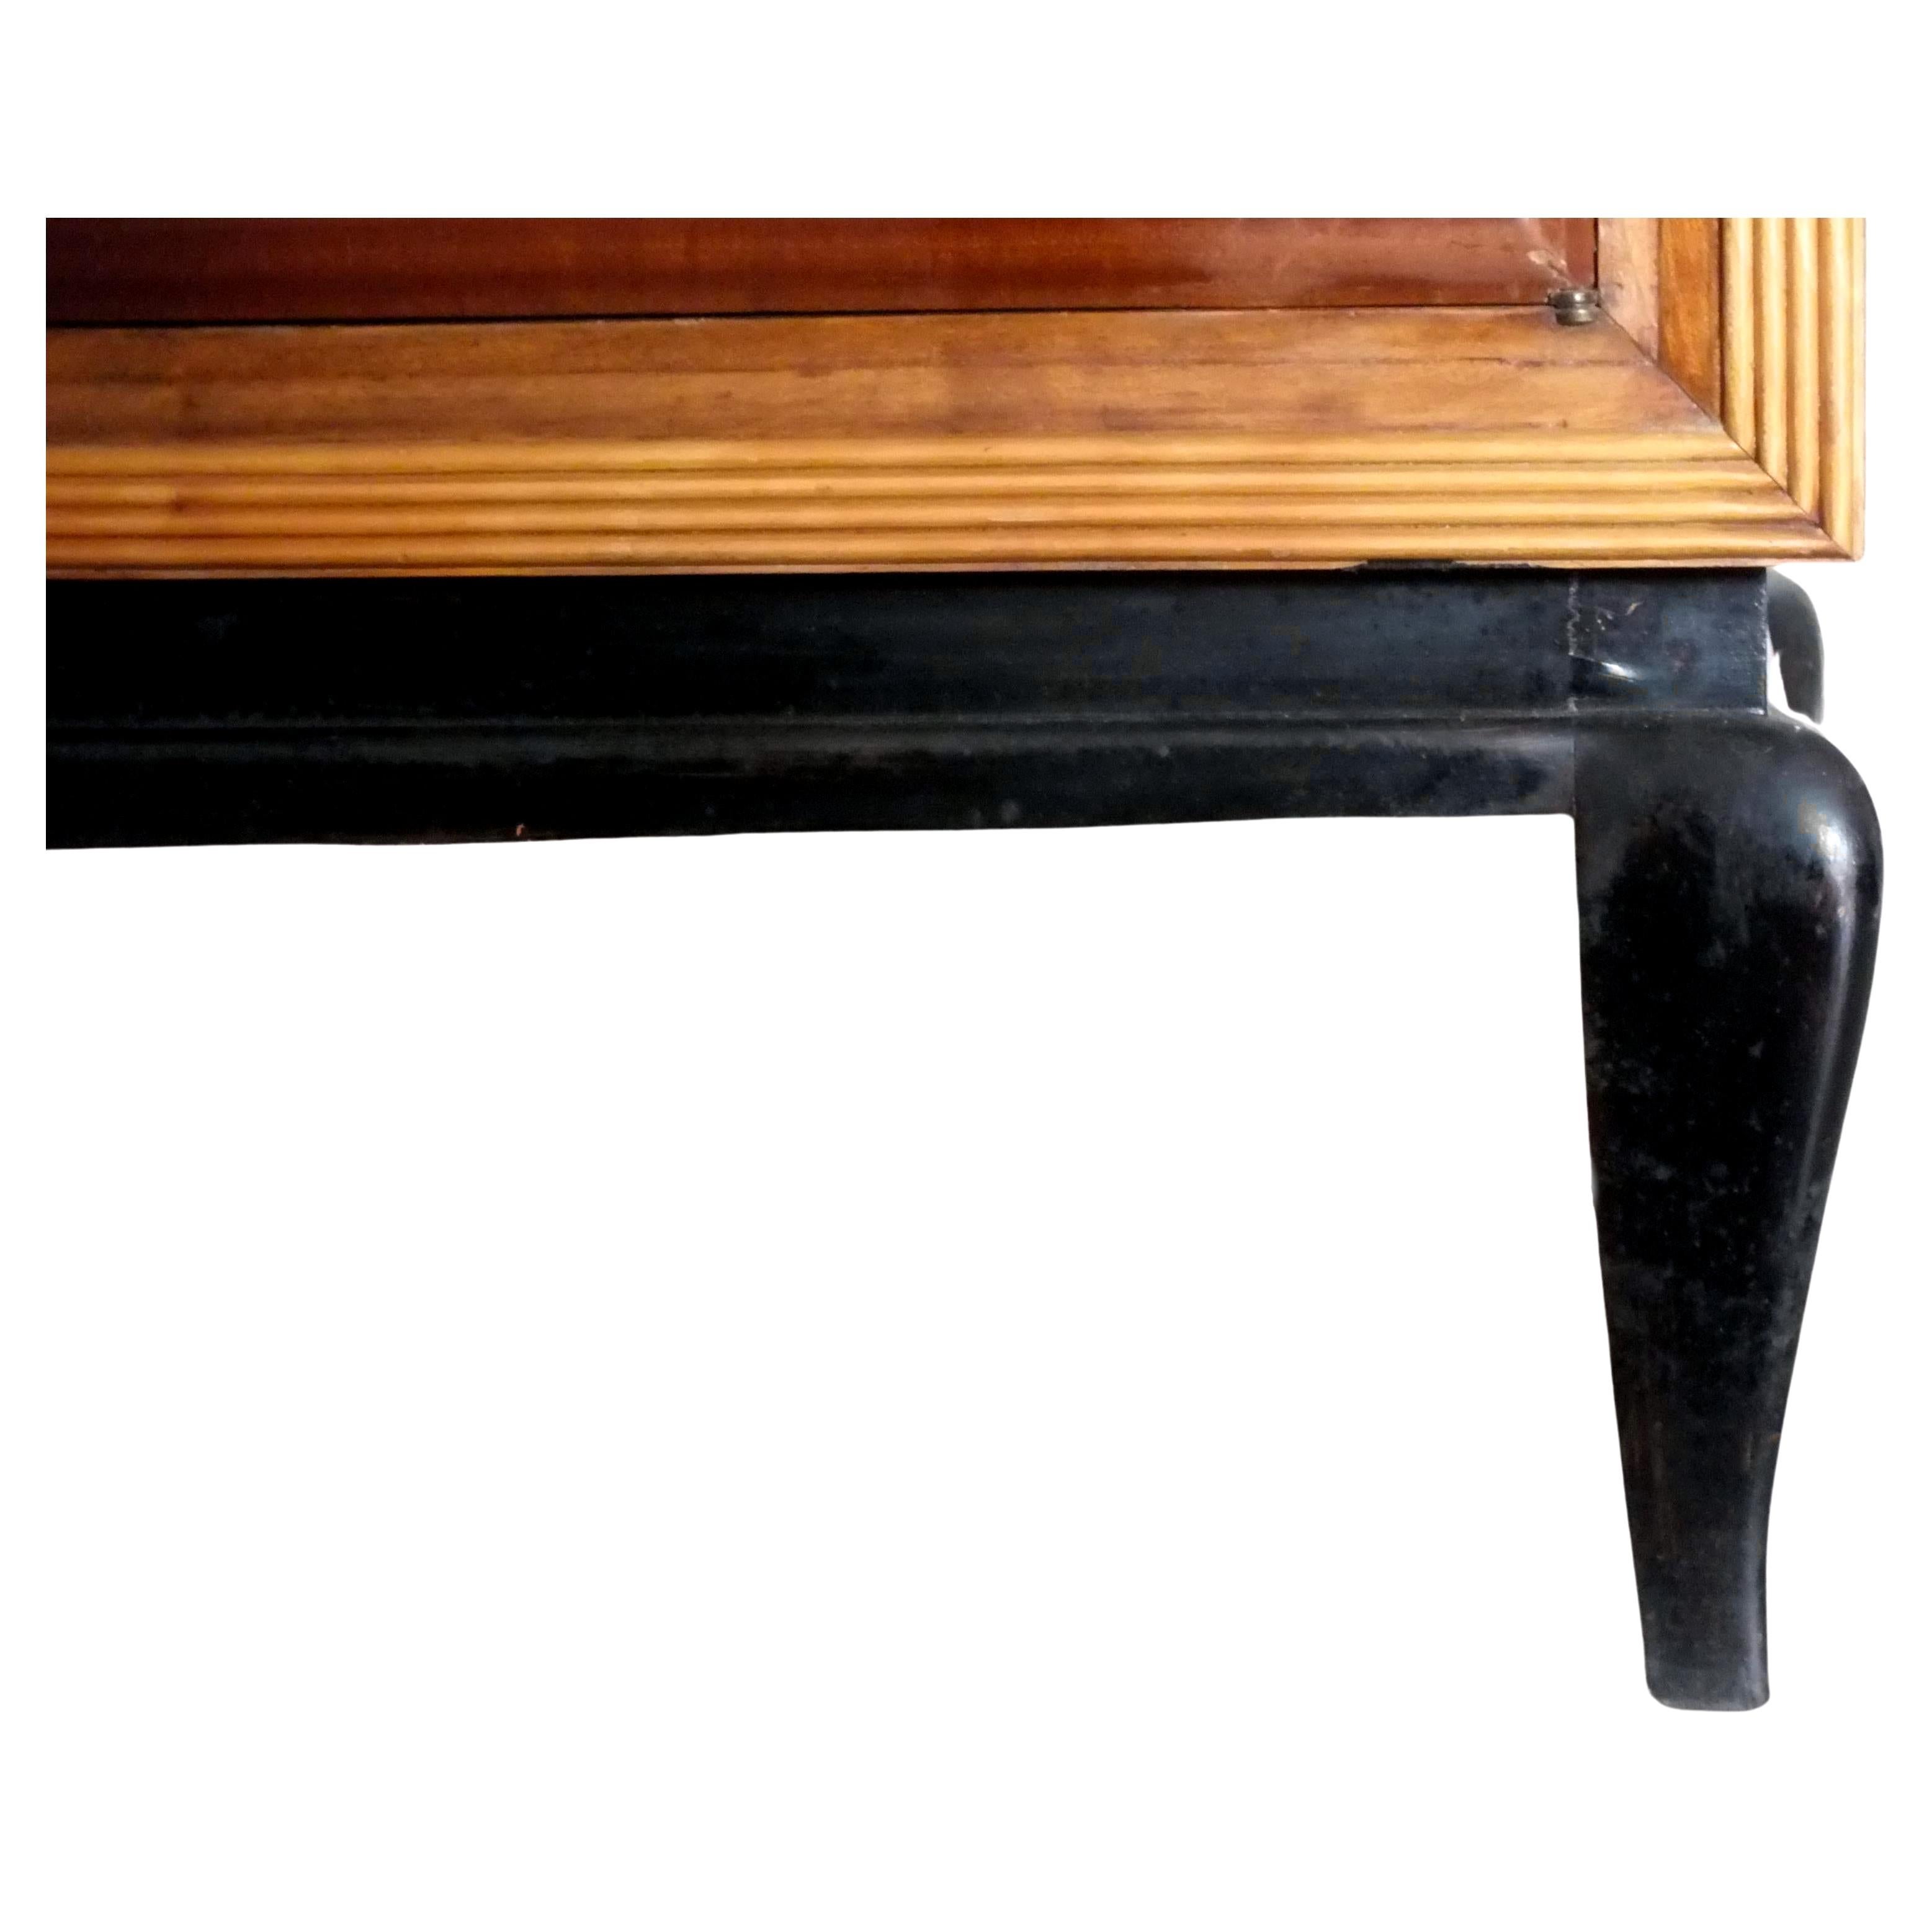 Buffa Paolo design in years '30 by Galdino Maspero Italy elegant sideboard For Sale 3